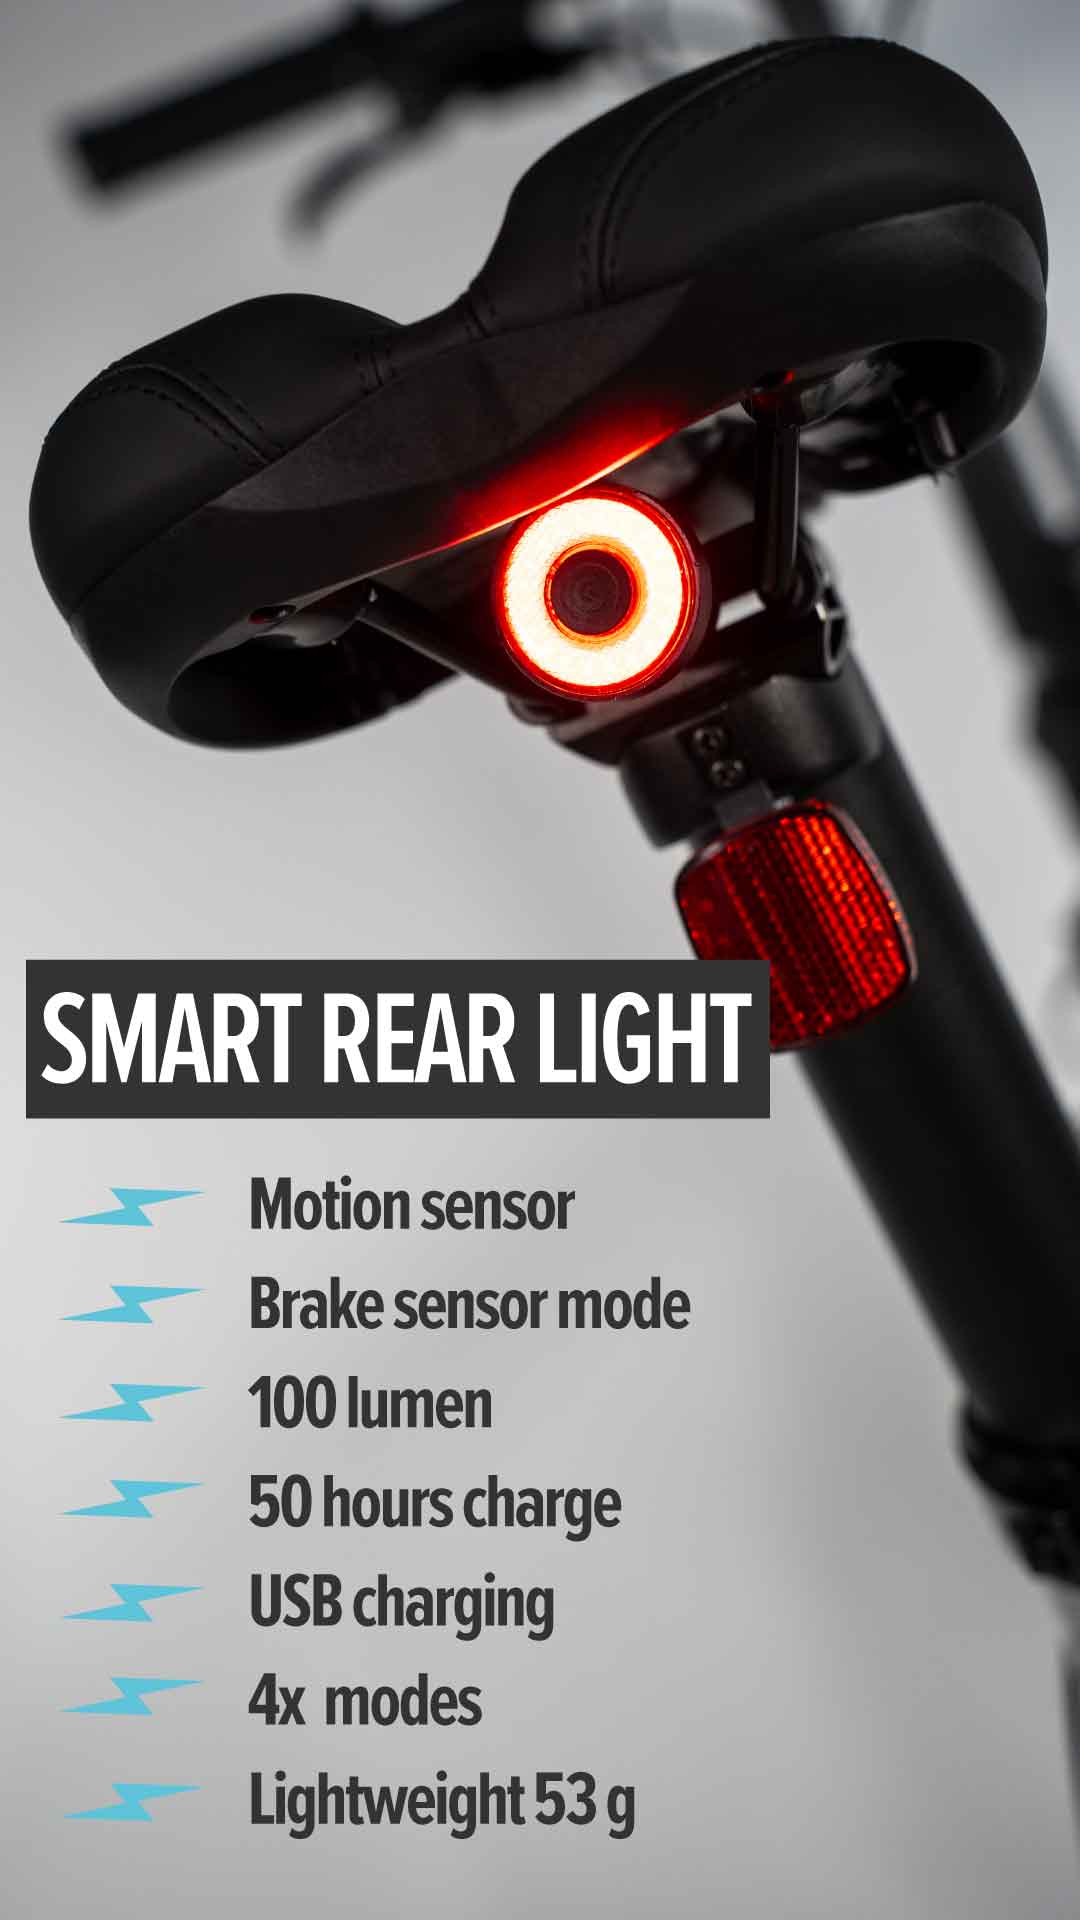 The Estarli smart rear light with motion sensor and brake sensor mode